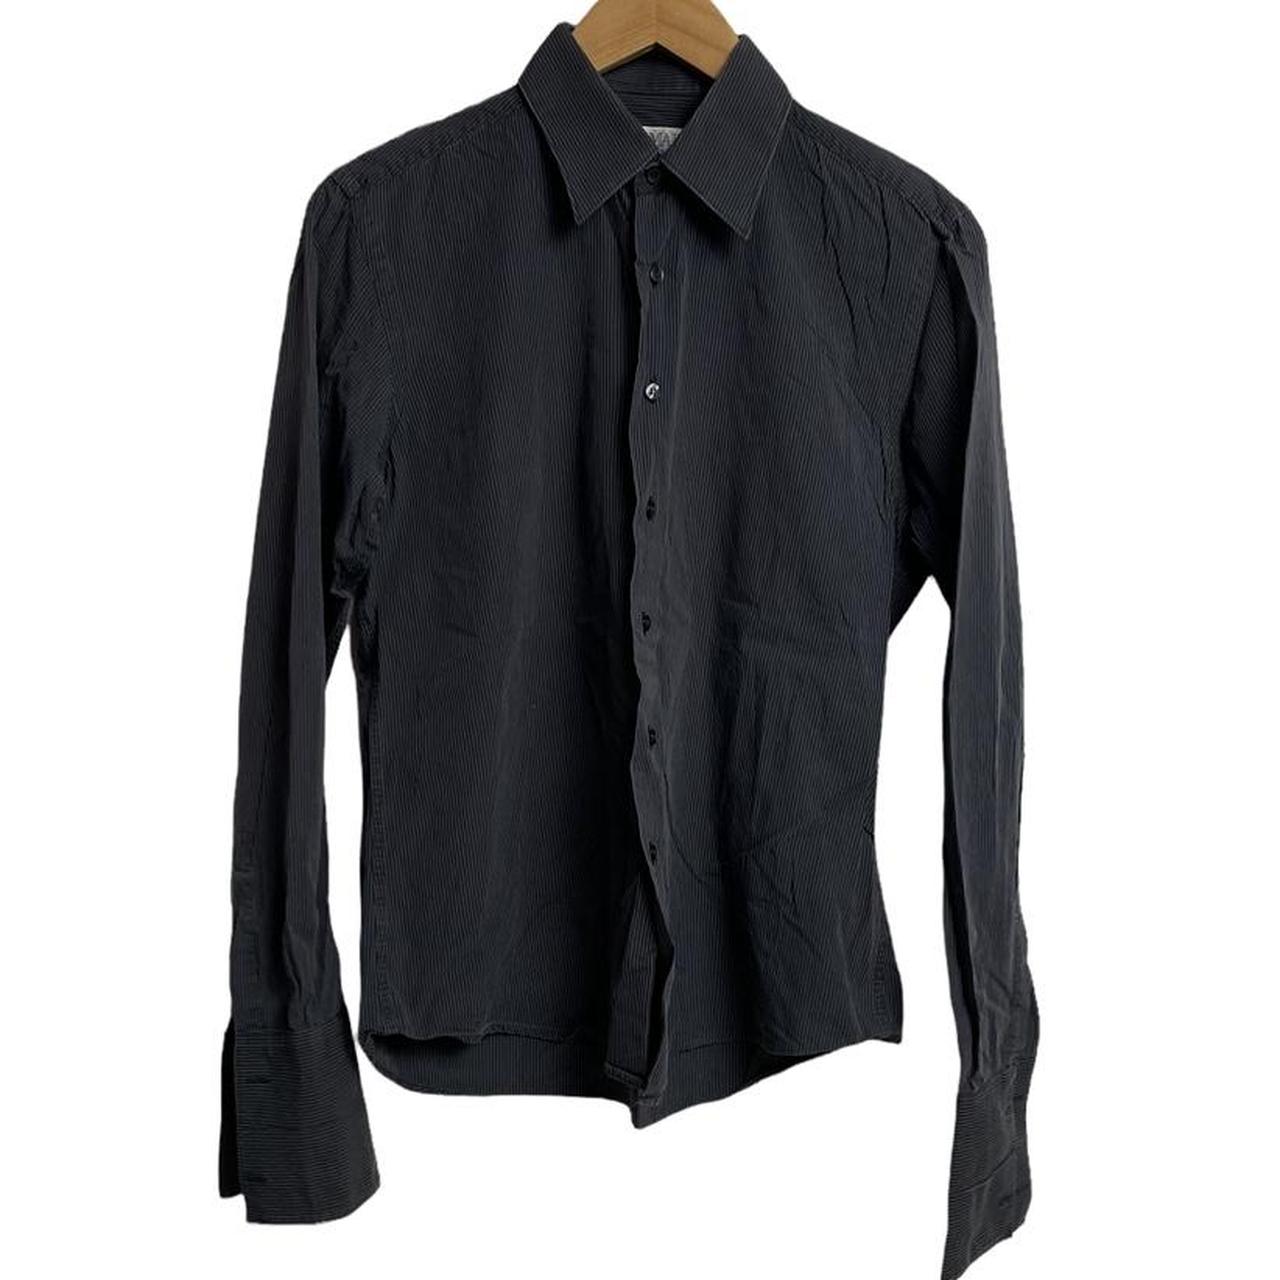 Balmain dress shirt black and grey pinstripe Size... - Depop